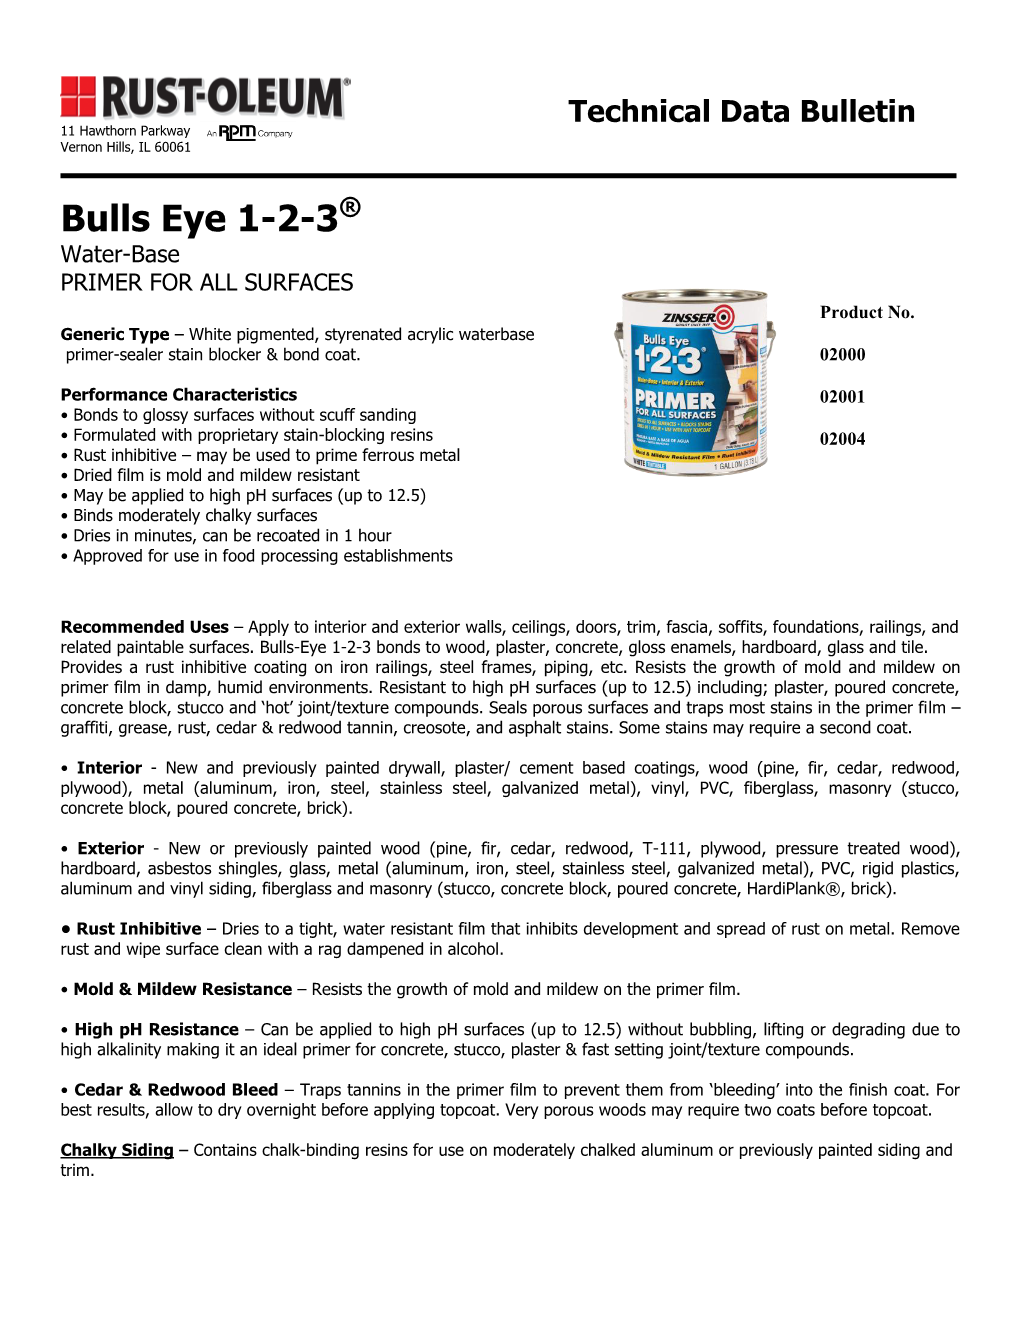 Bulls Eye 1-2-3®